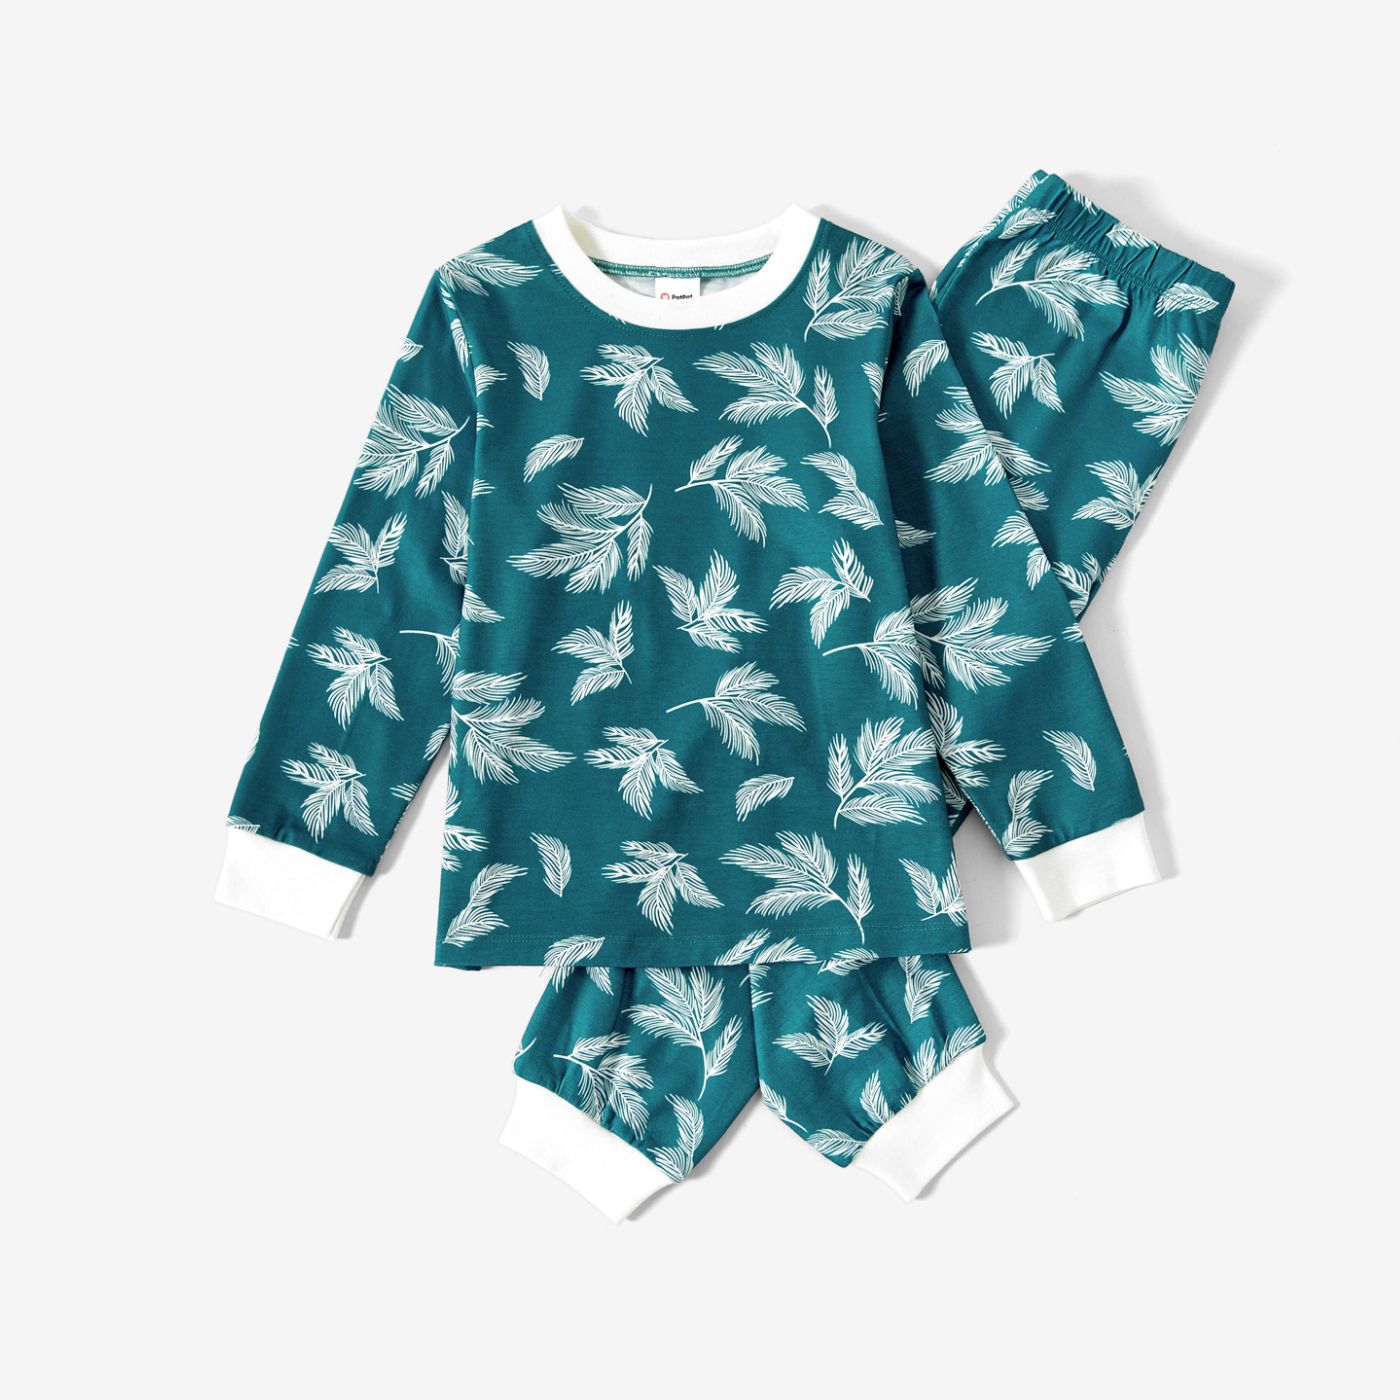 Christmas Family Matching Leaves Print Long-sleeve Pajamas Sets(Flame Resistant)